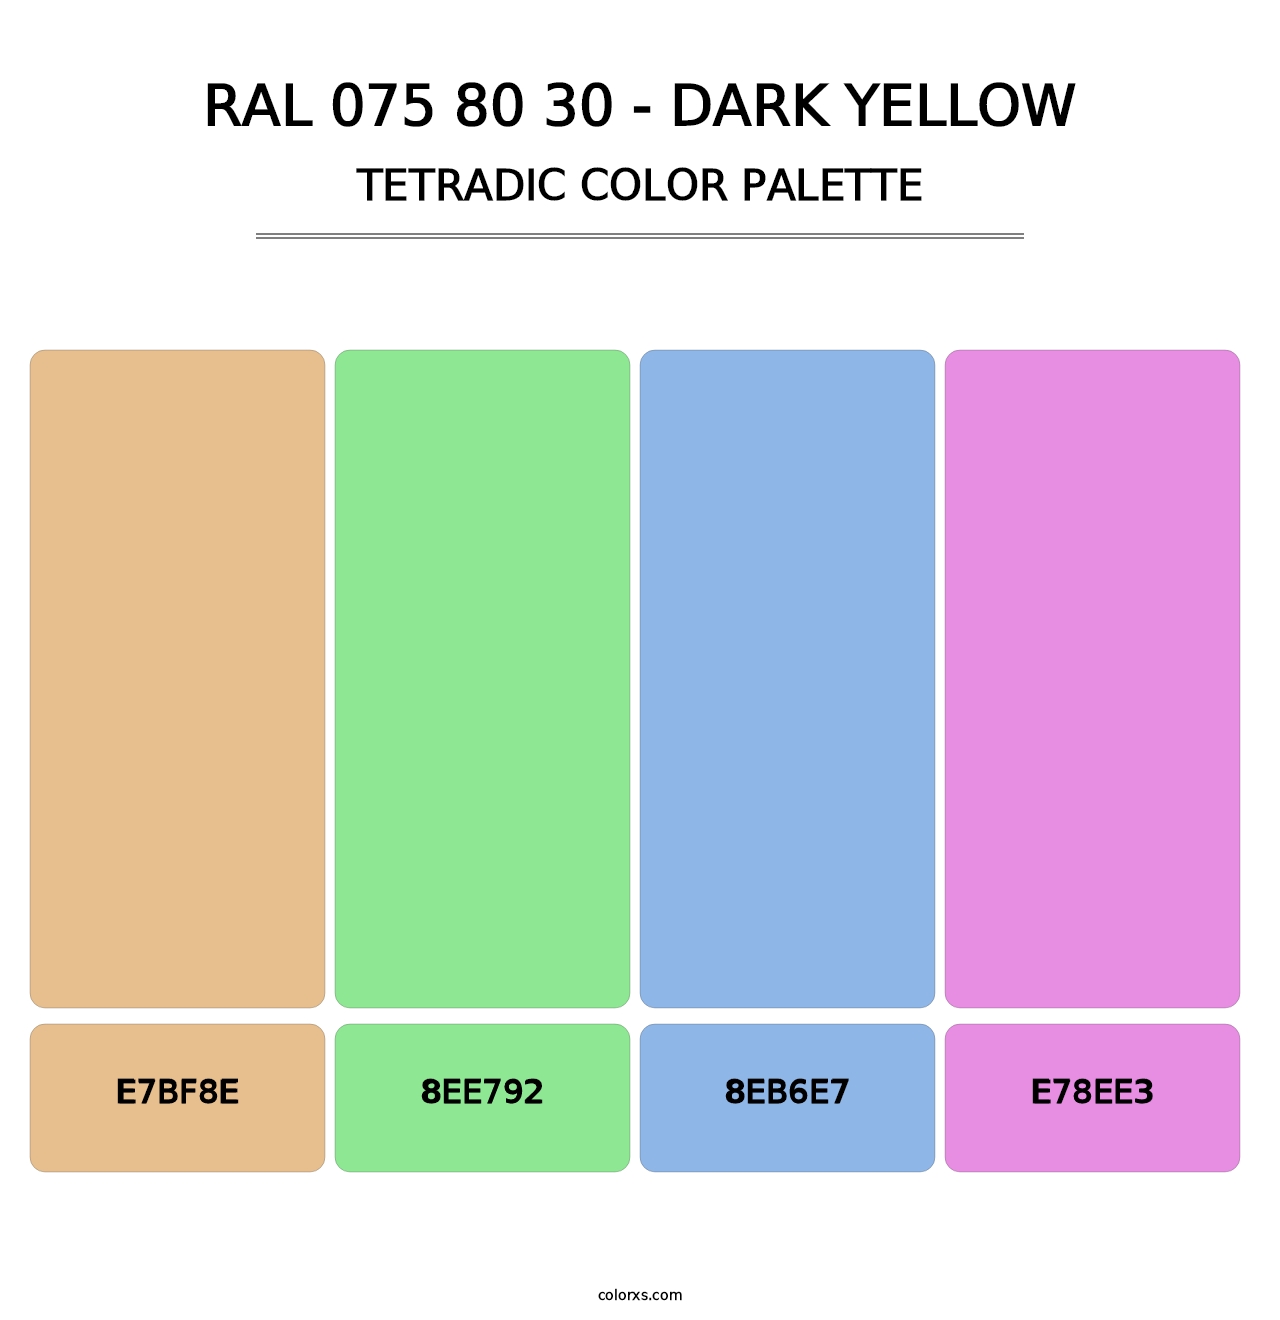 RAL 075 80 30 - Dark Yellow - Tetradic Color Palette